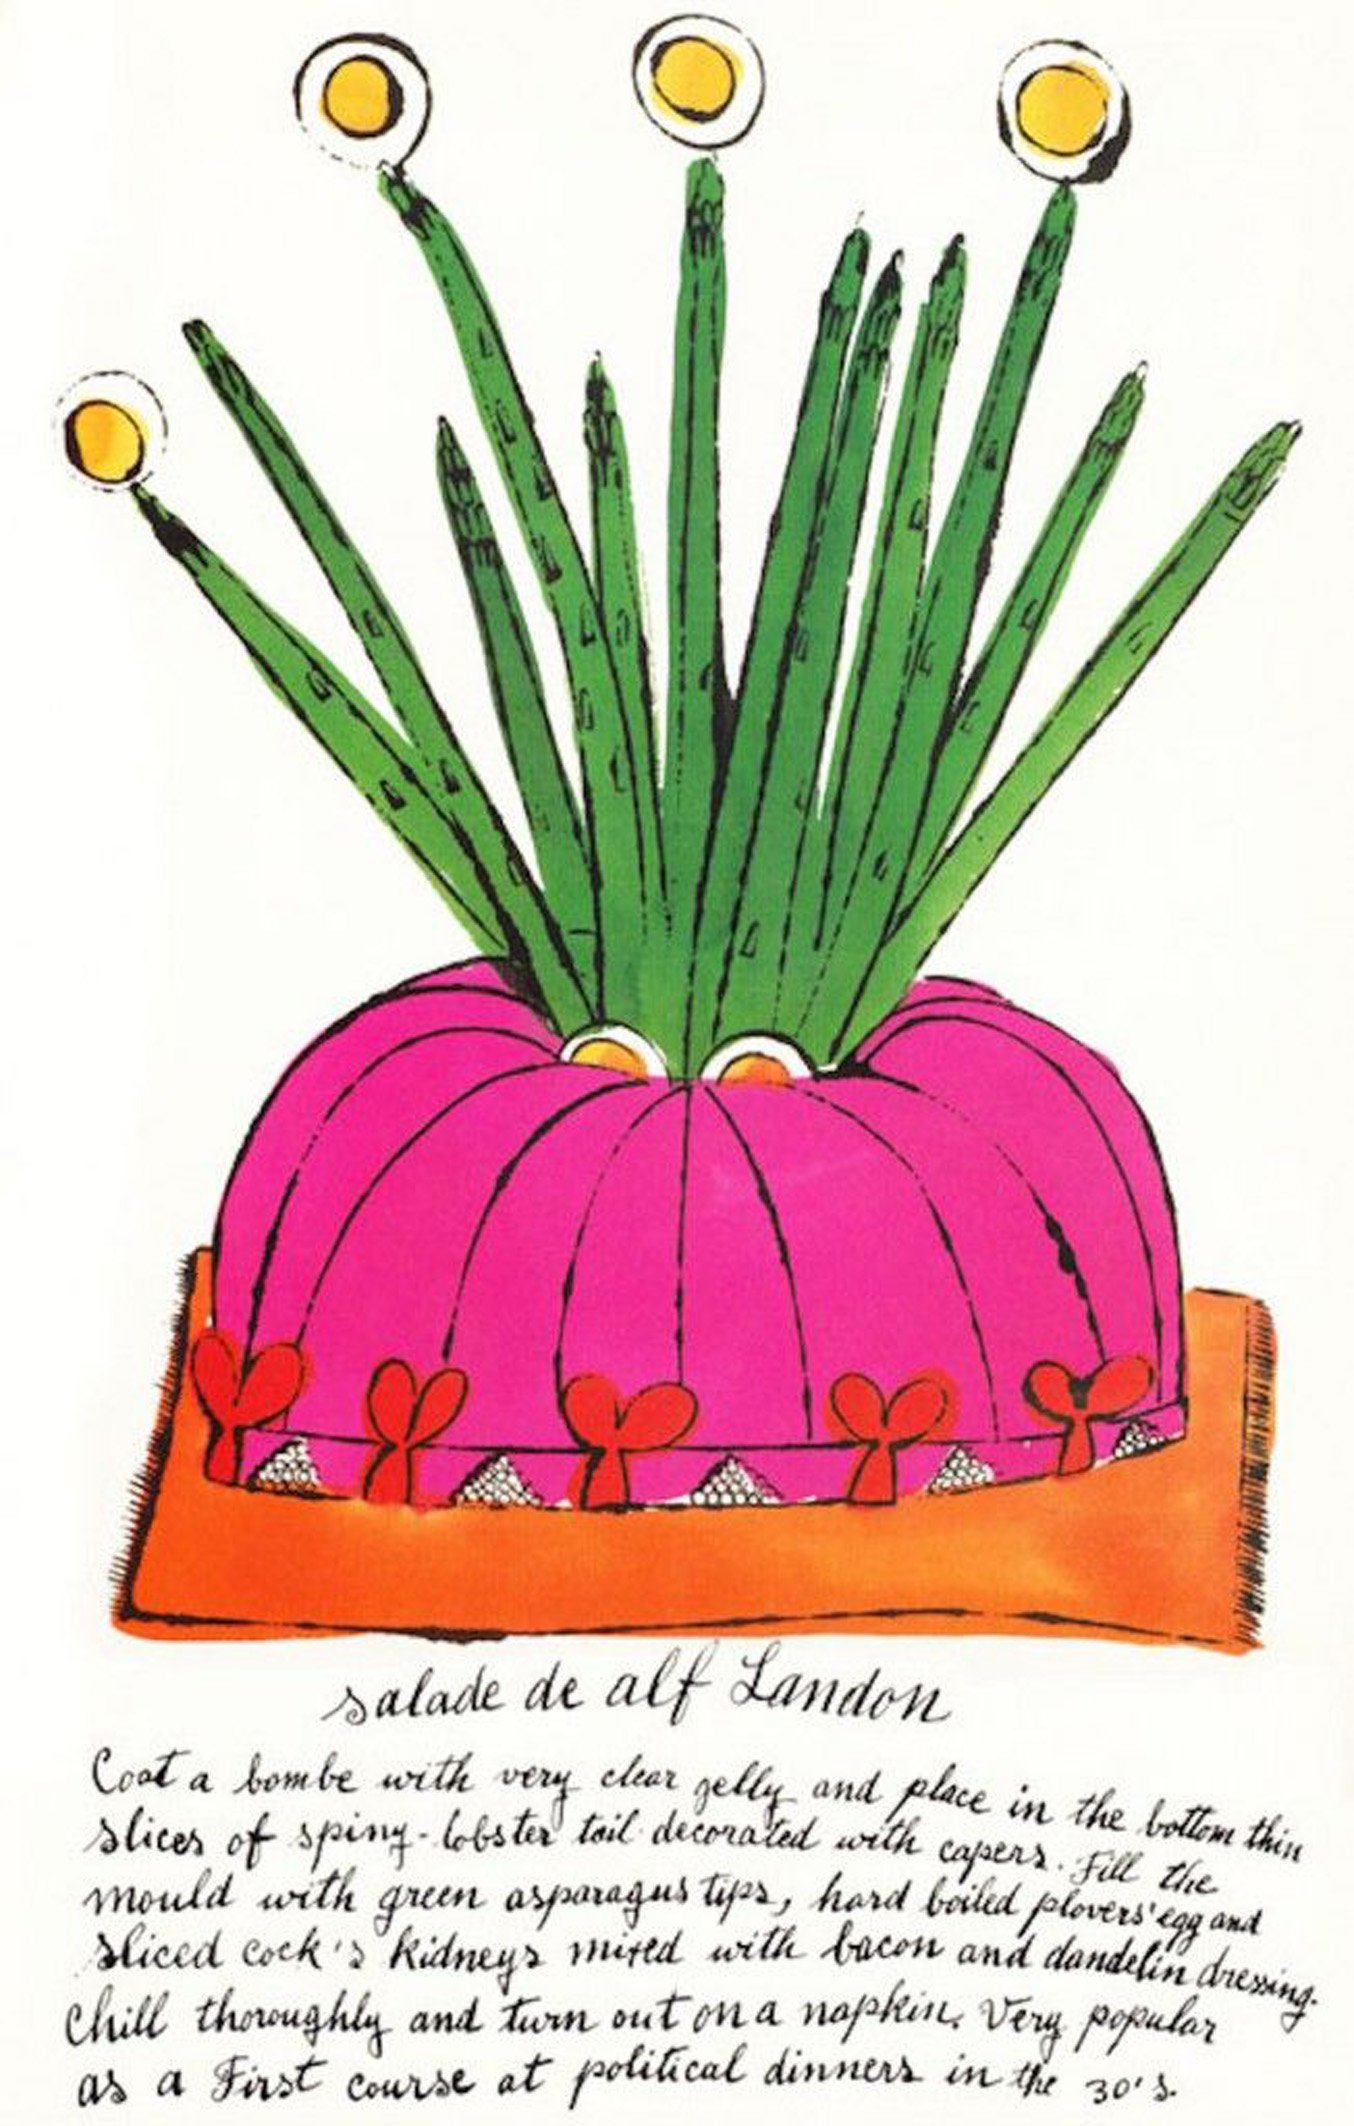 Andy Warhol, Salade de alf Landon, 1959. Dal libro d'artista Wild Raspberries